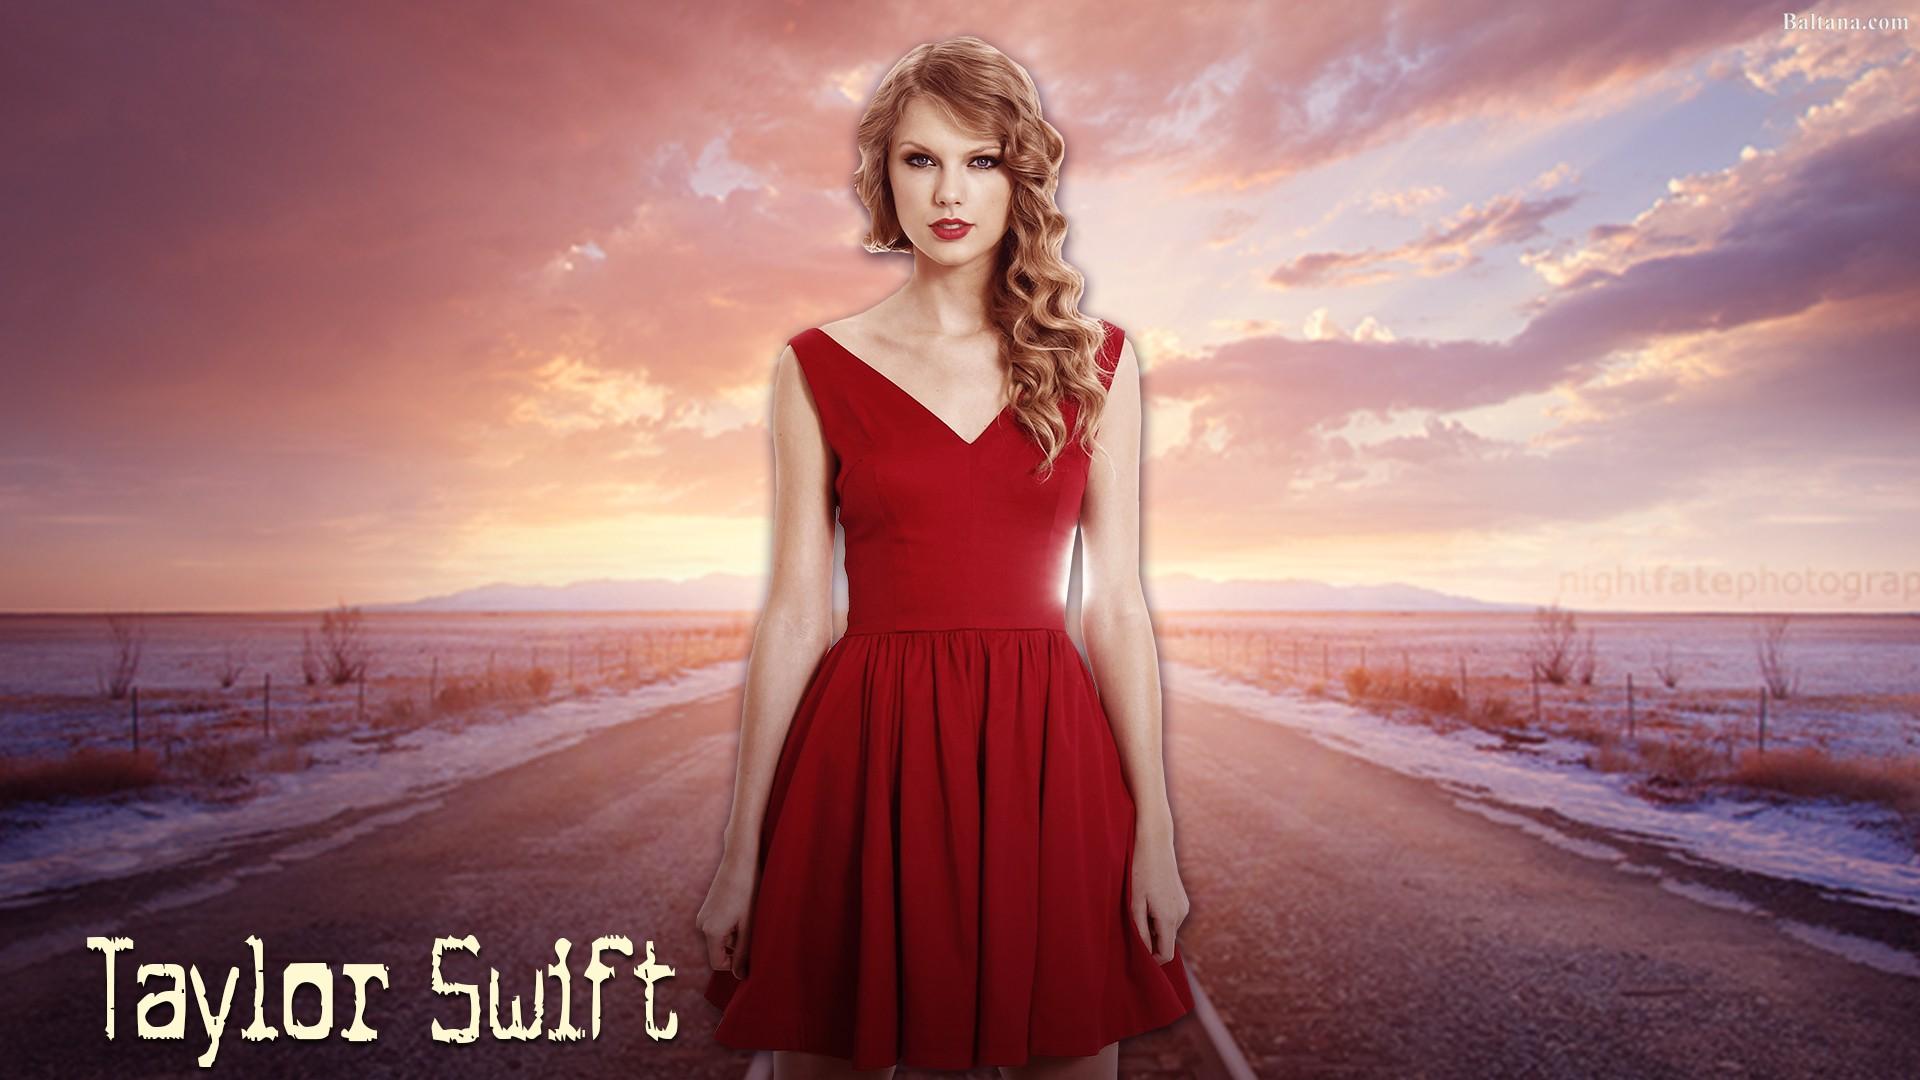 Taylor Swift Red Dress Wallpaper 30139